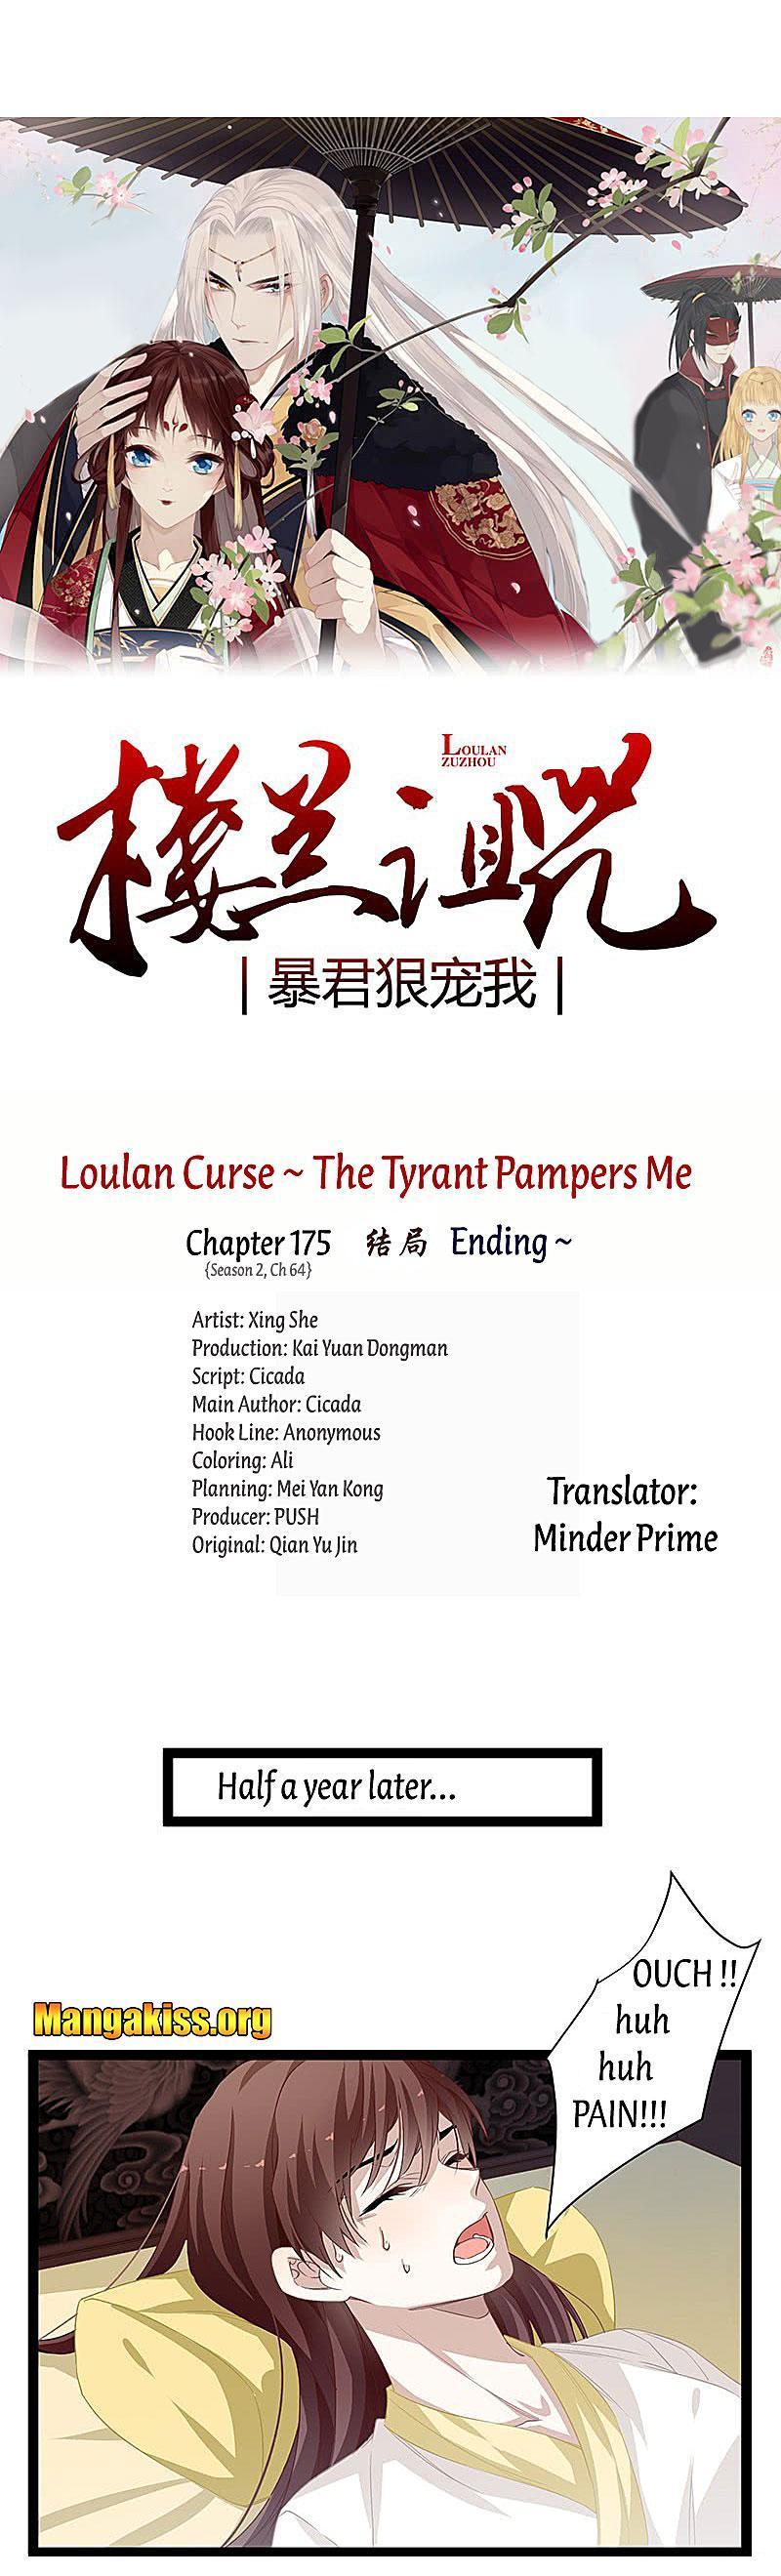 read loulan curse tyrant pampered me manga